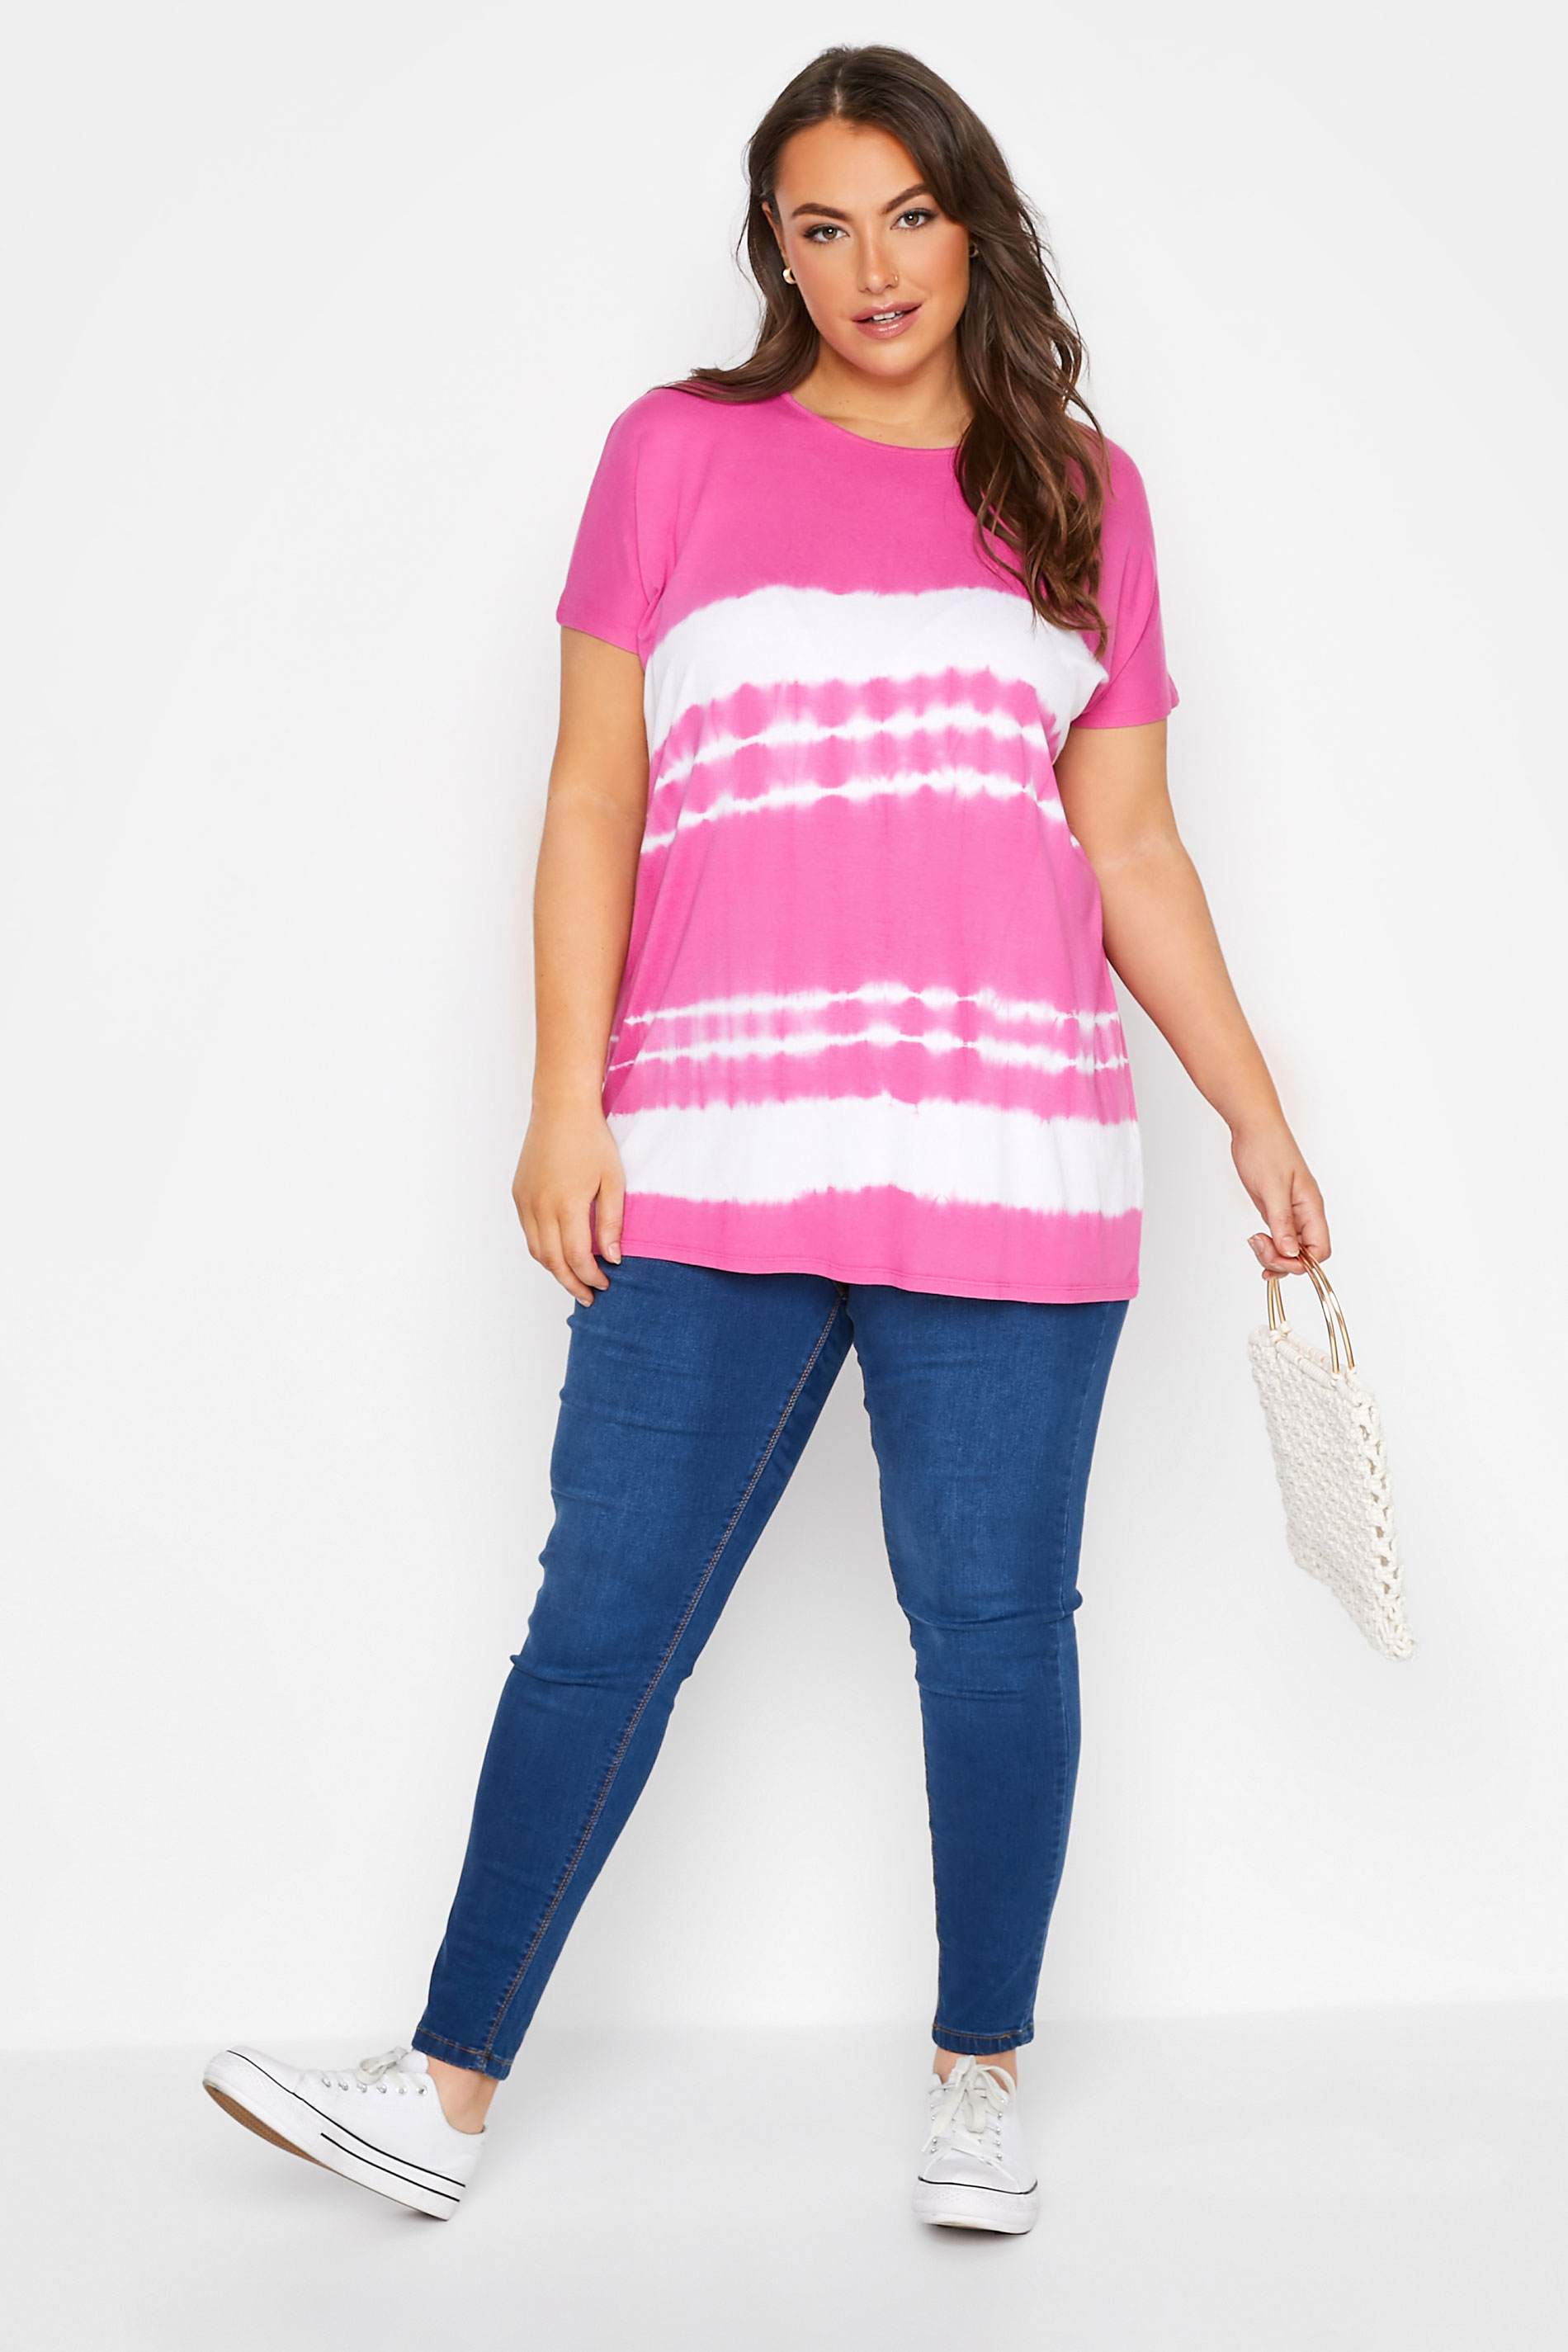 Grande taille  Tops Grande taille  T-Shirts | T-Shirt Rose Tie & Dye en Jersey - NQ06921